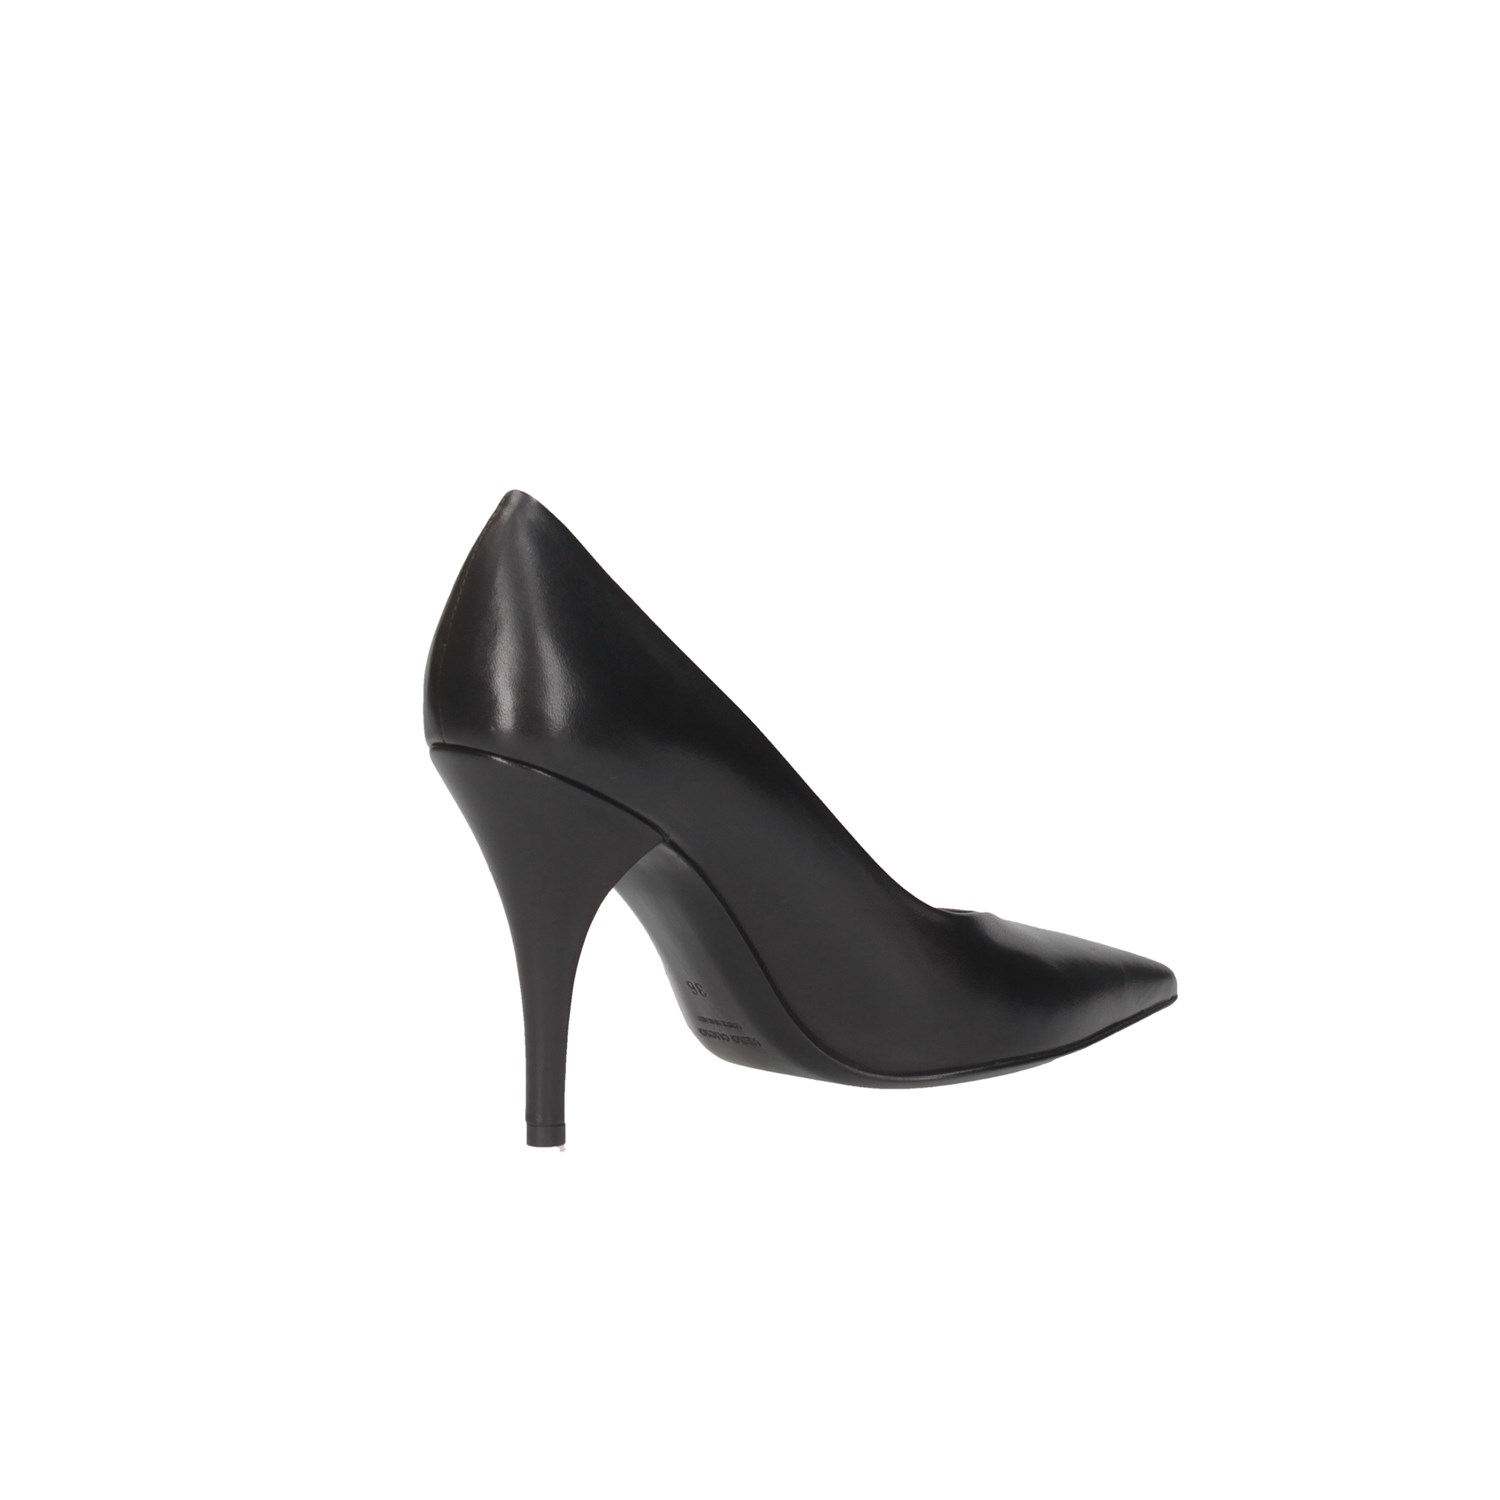 Alchimia 20573 Black Shoes Woman 